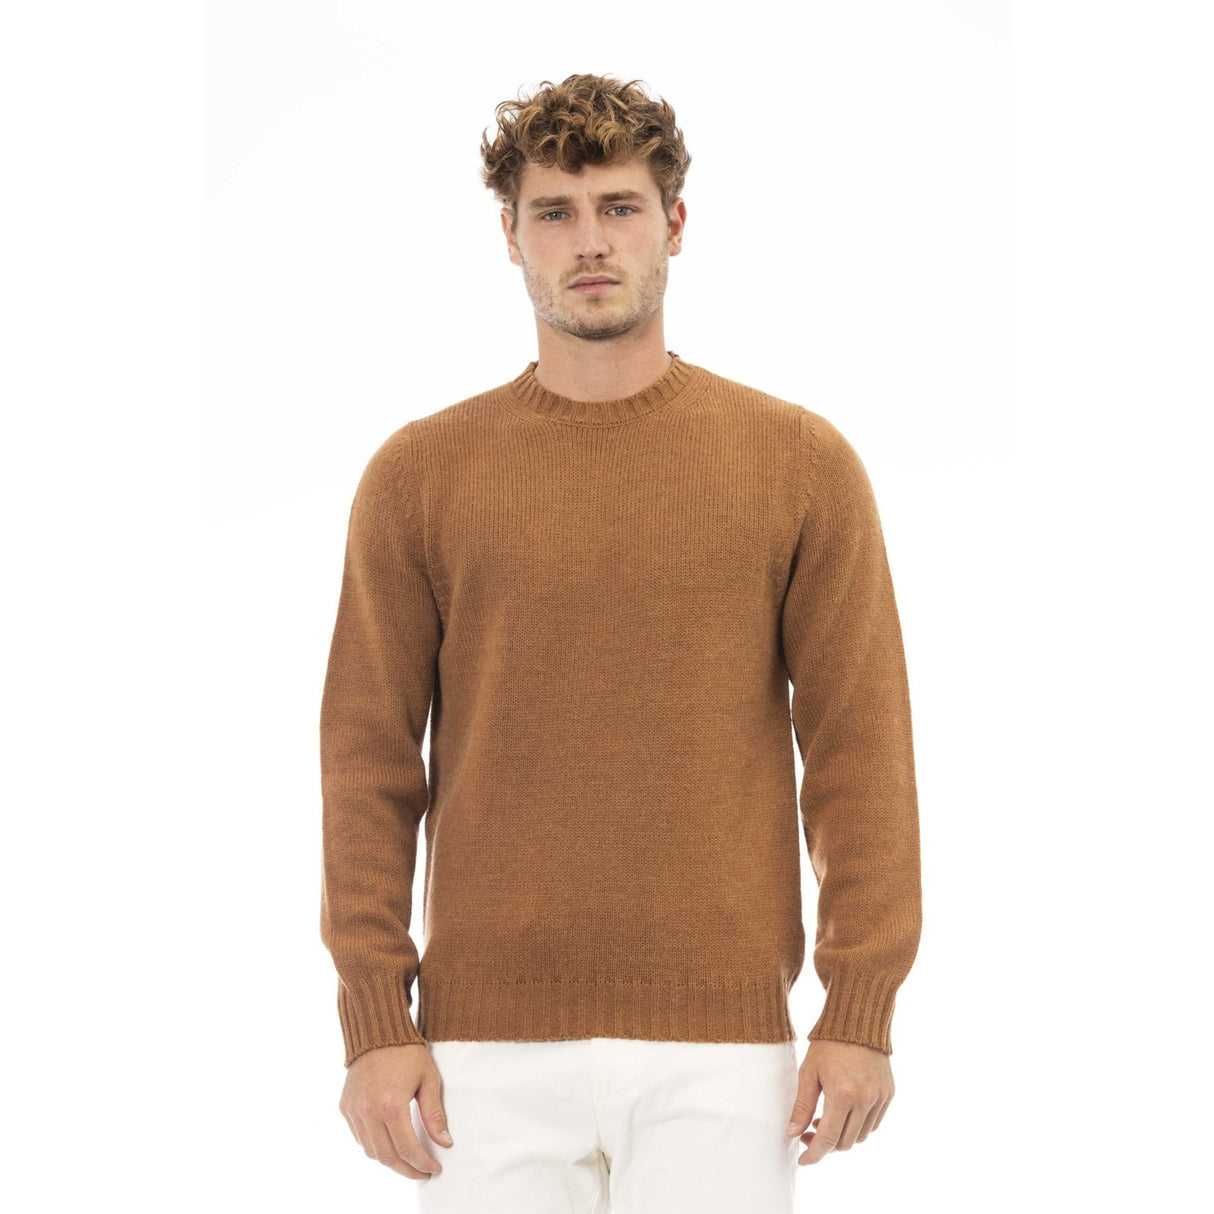 Men's sweater Fall/Winter sweater Italian-made sweater Warm sweater Soft sweater Breathable sweater Comfortable sweater Layering sweater Stylish sweater Round neck sweater Regular fit sweater